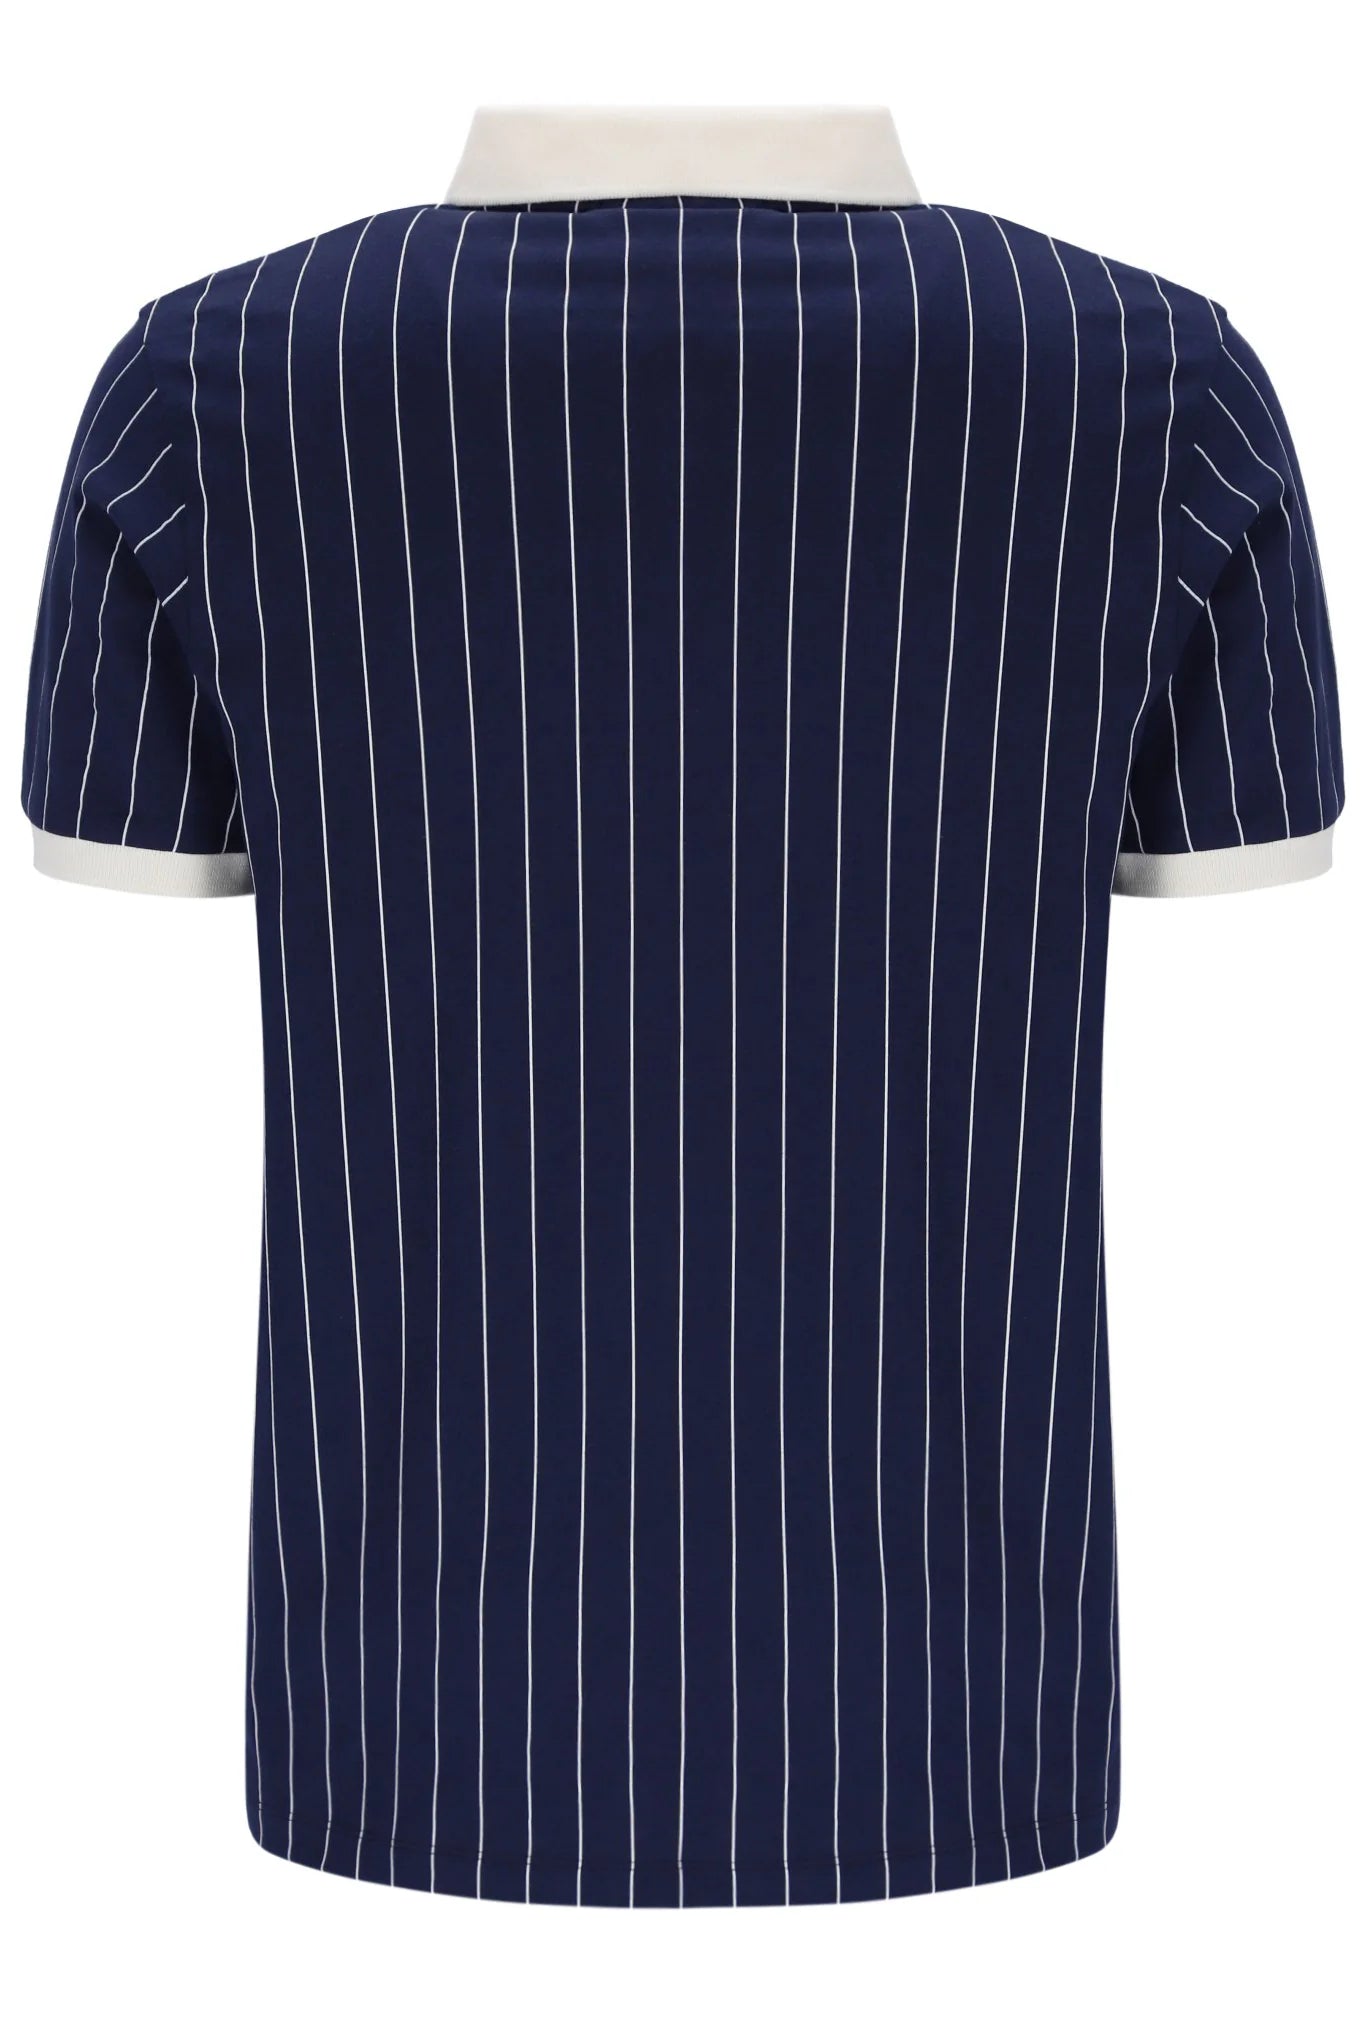 Fila Vintage Men's BB1 Classic Vintage Stripped Polo Shirt Fila Navy